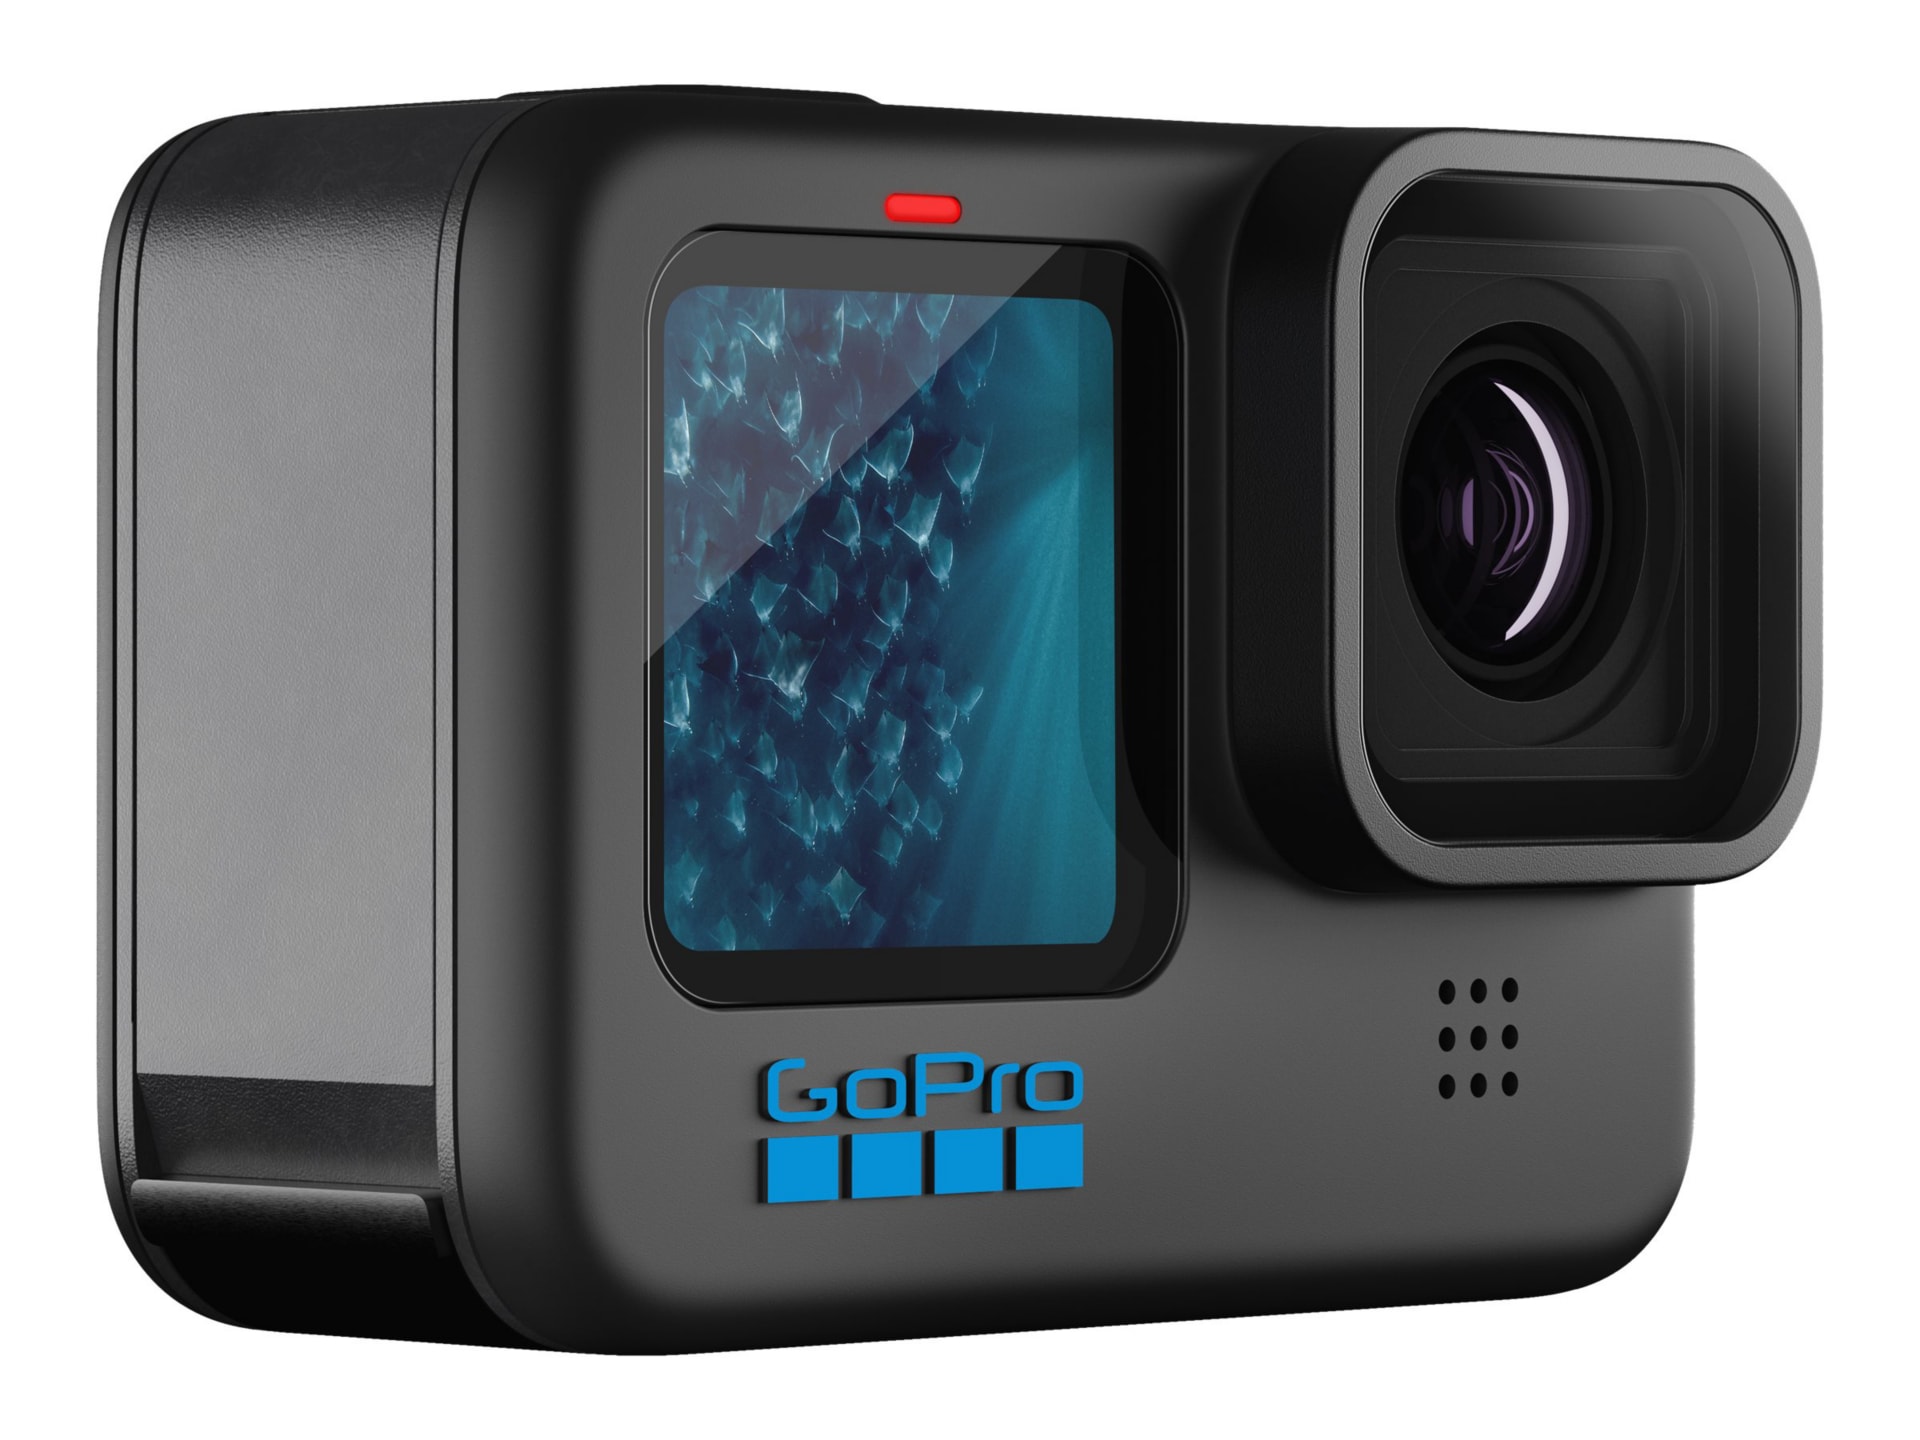 GoPro HERO9 Camera - Black